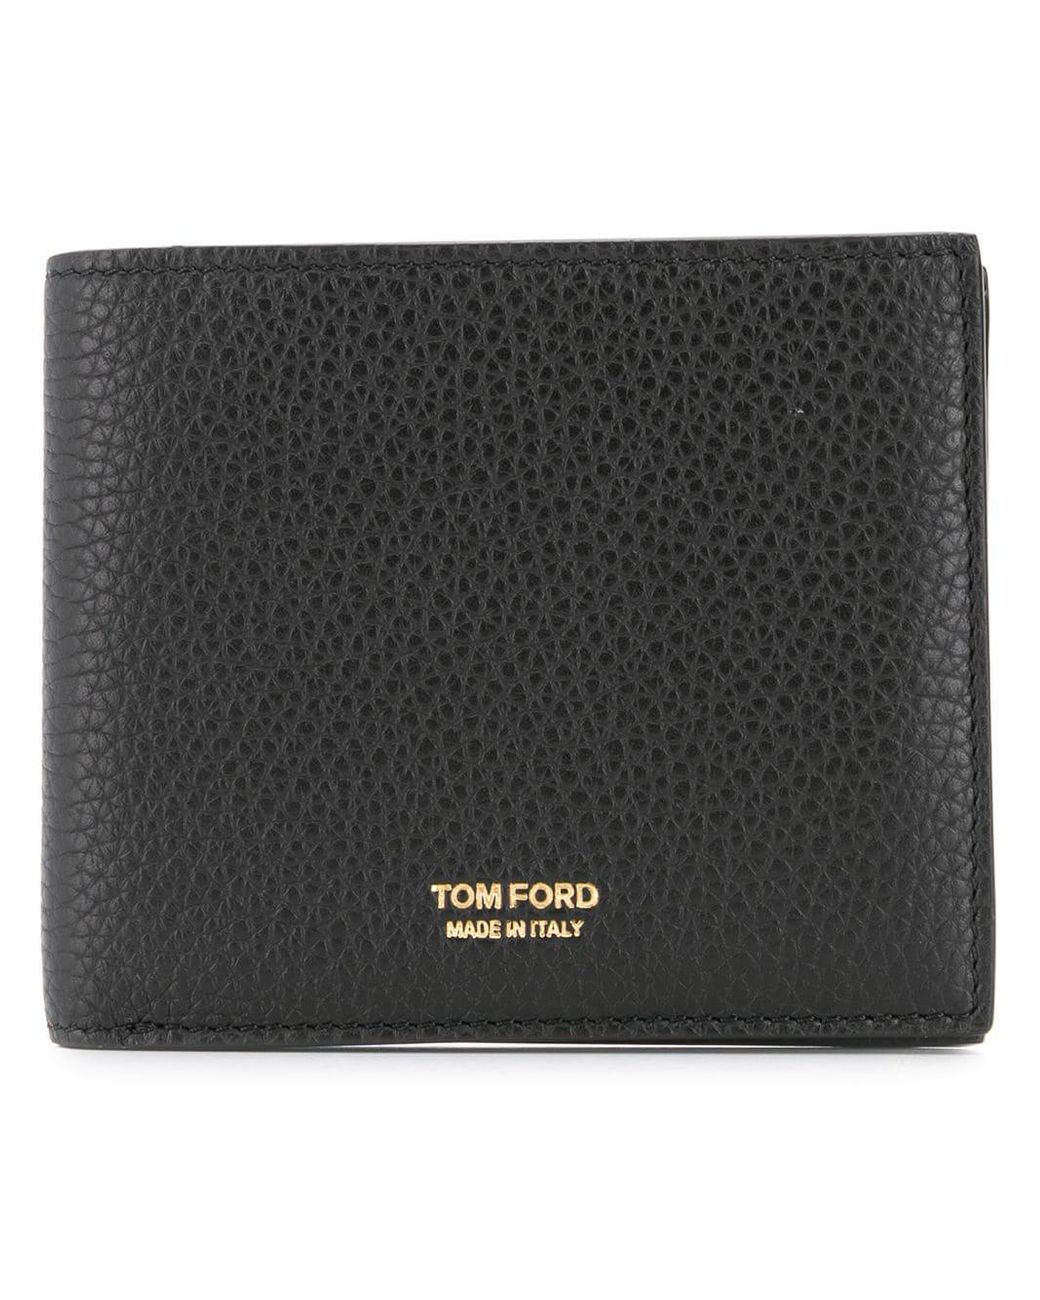 Tom Ford Leather Embossed Logo Bifold Wallet in Black for Men - Save 50 ...